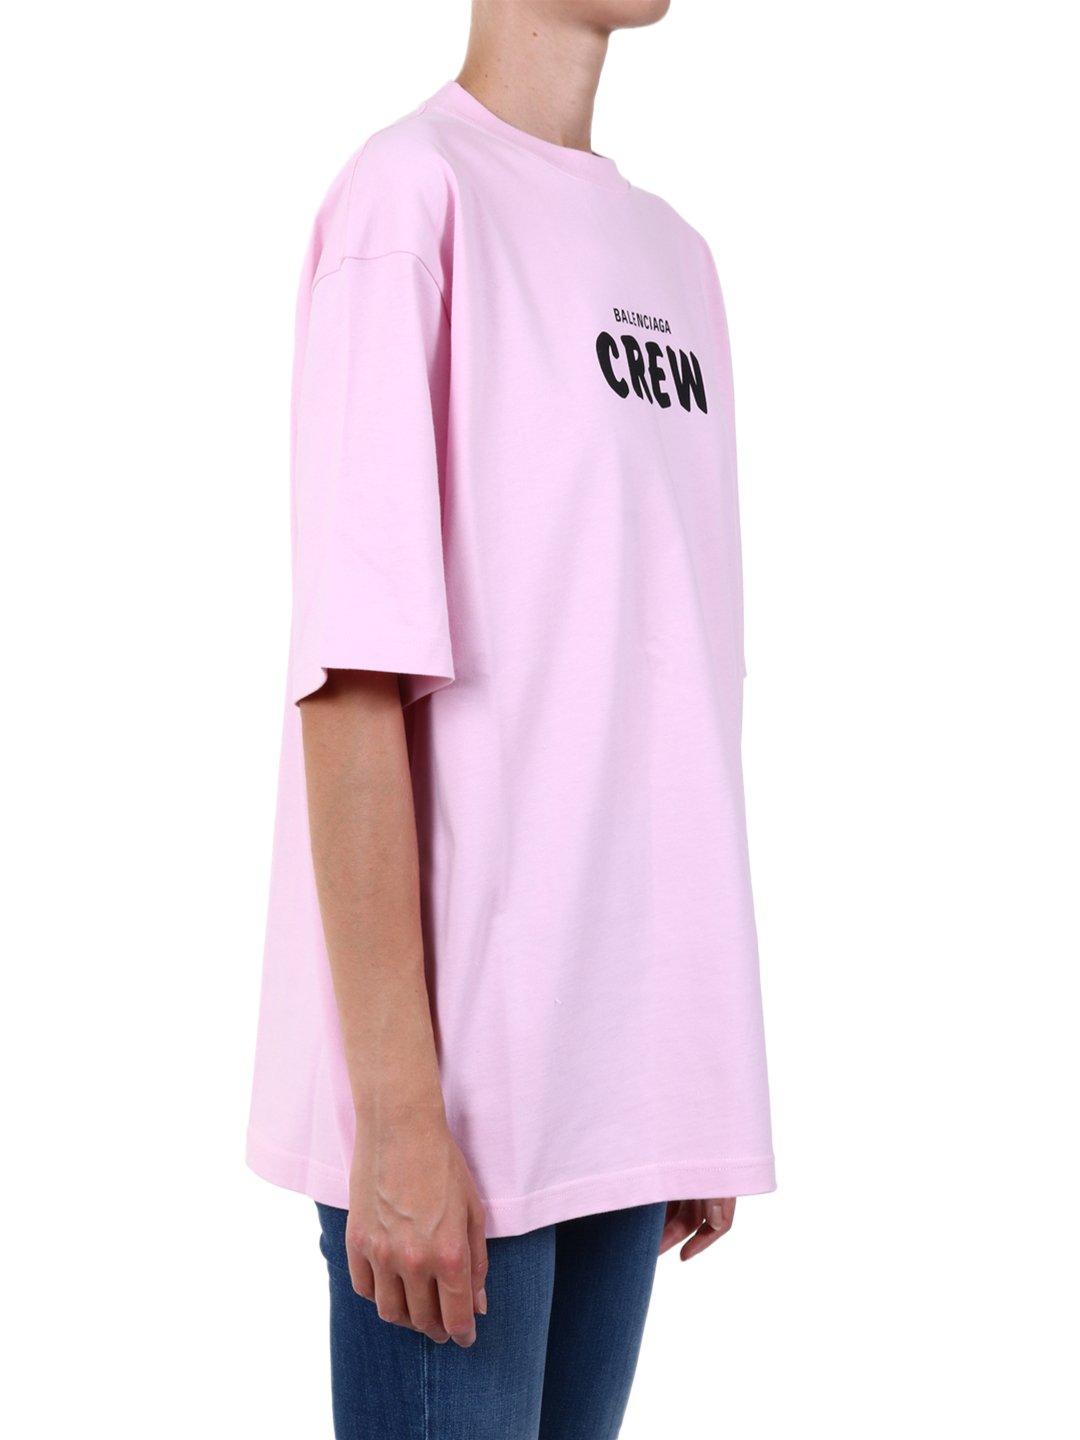 Balenciaga Crew print Tshirt pink  MODES